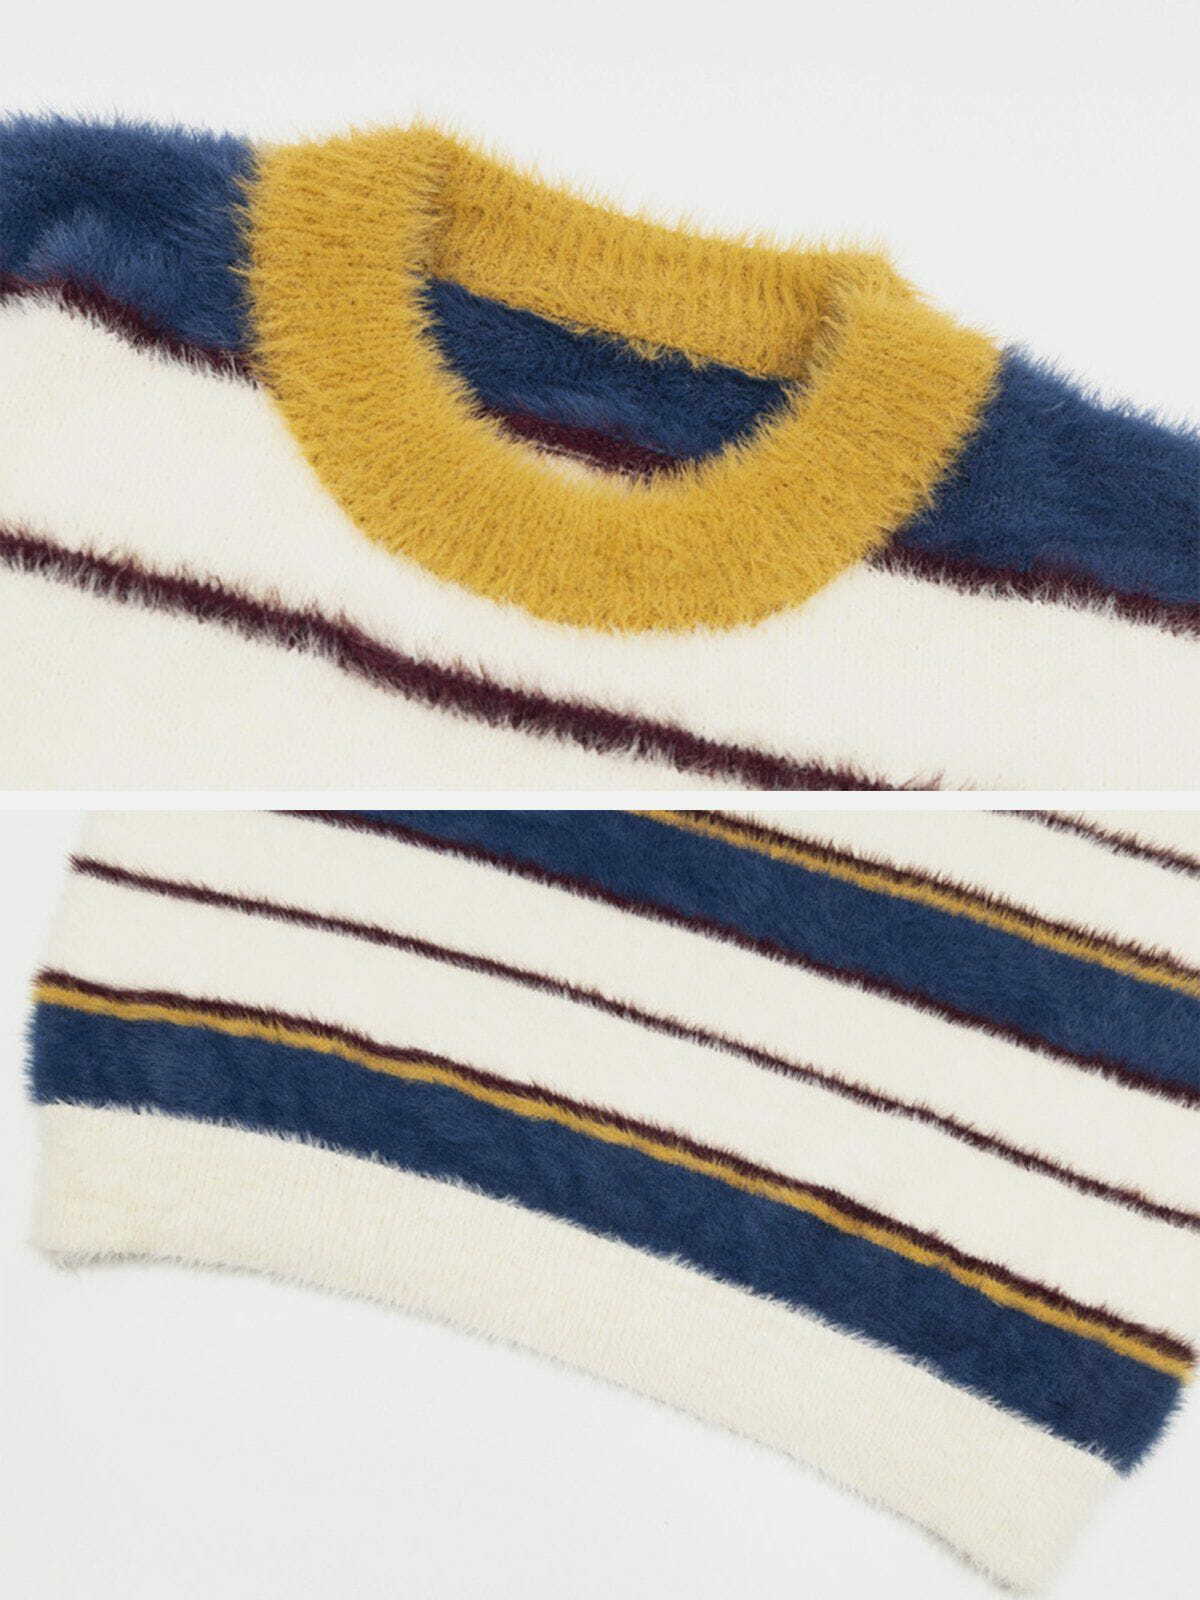 colorful striped knit sweater retro chic statement 1647